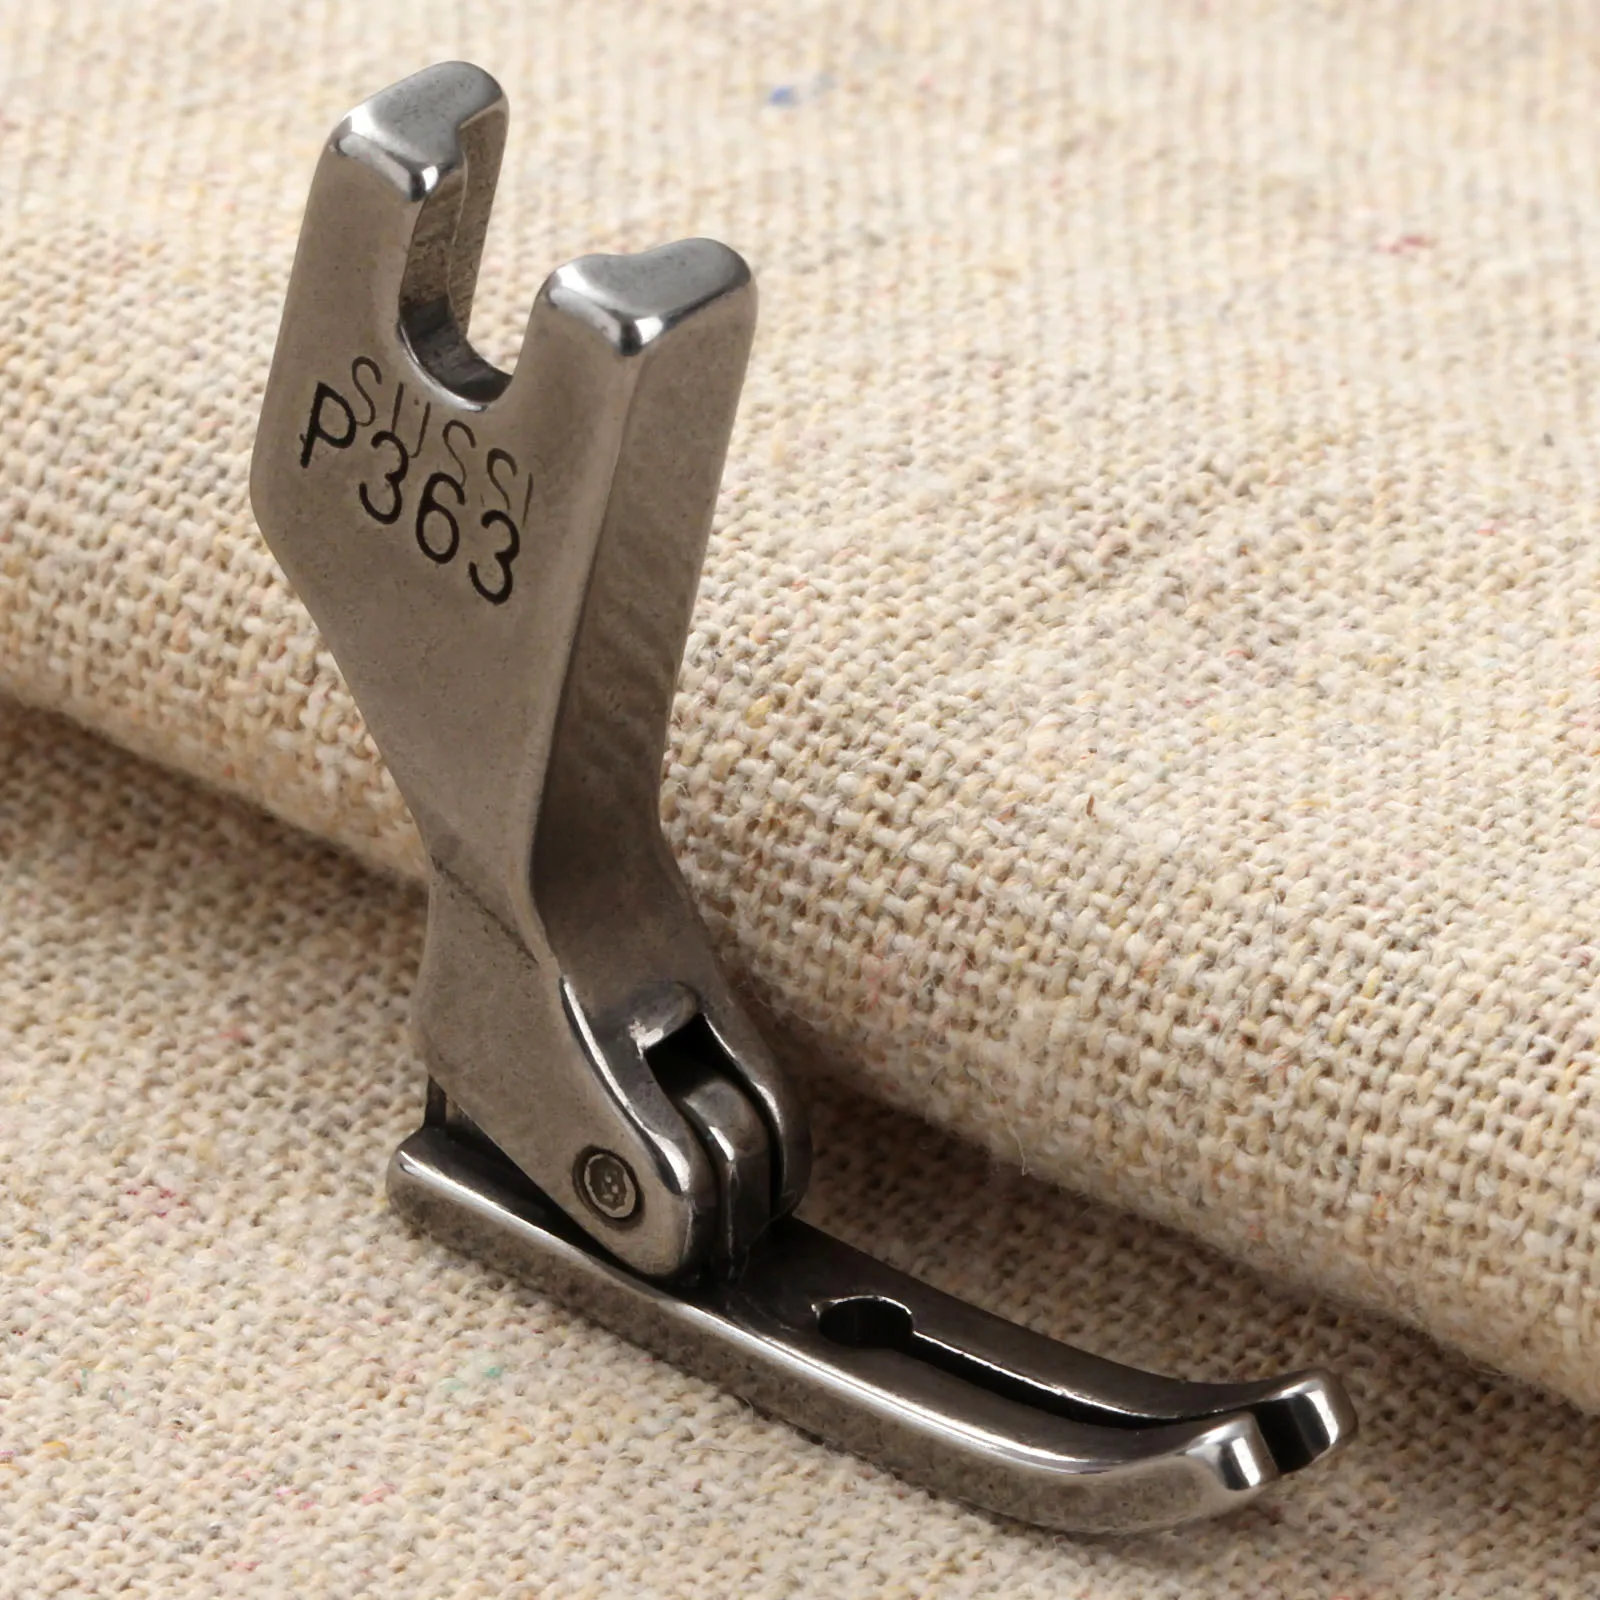 Industrial Sewing Machine Steel Narrow Zipper Presser Foot P363 for Brother Juki 